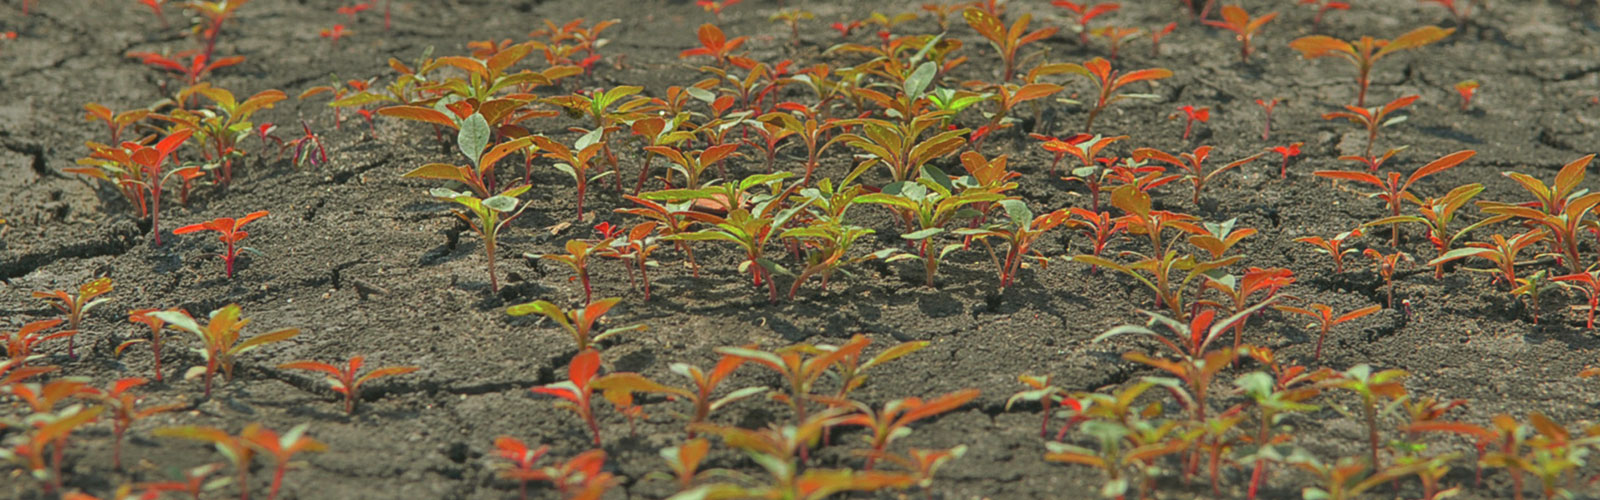 Glyphosate-resistant waterhemp (Amaranthus rudis Sauer), photo by Debalin Sarangi